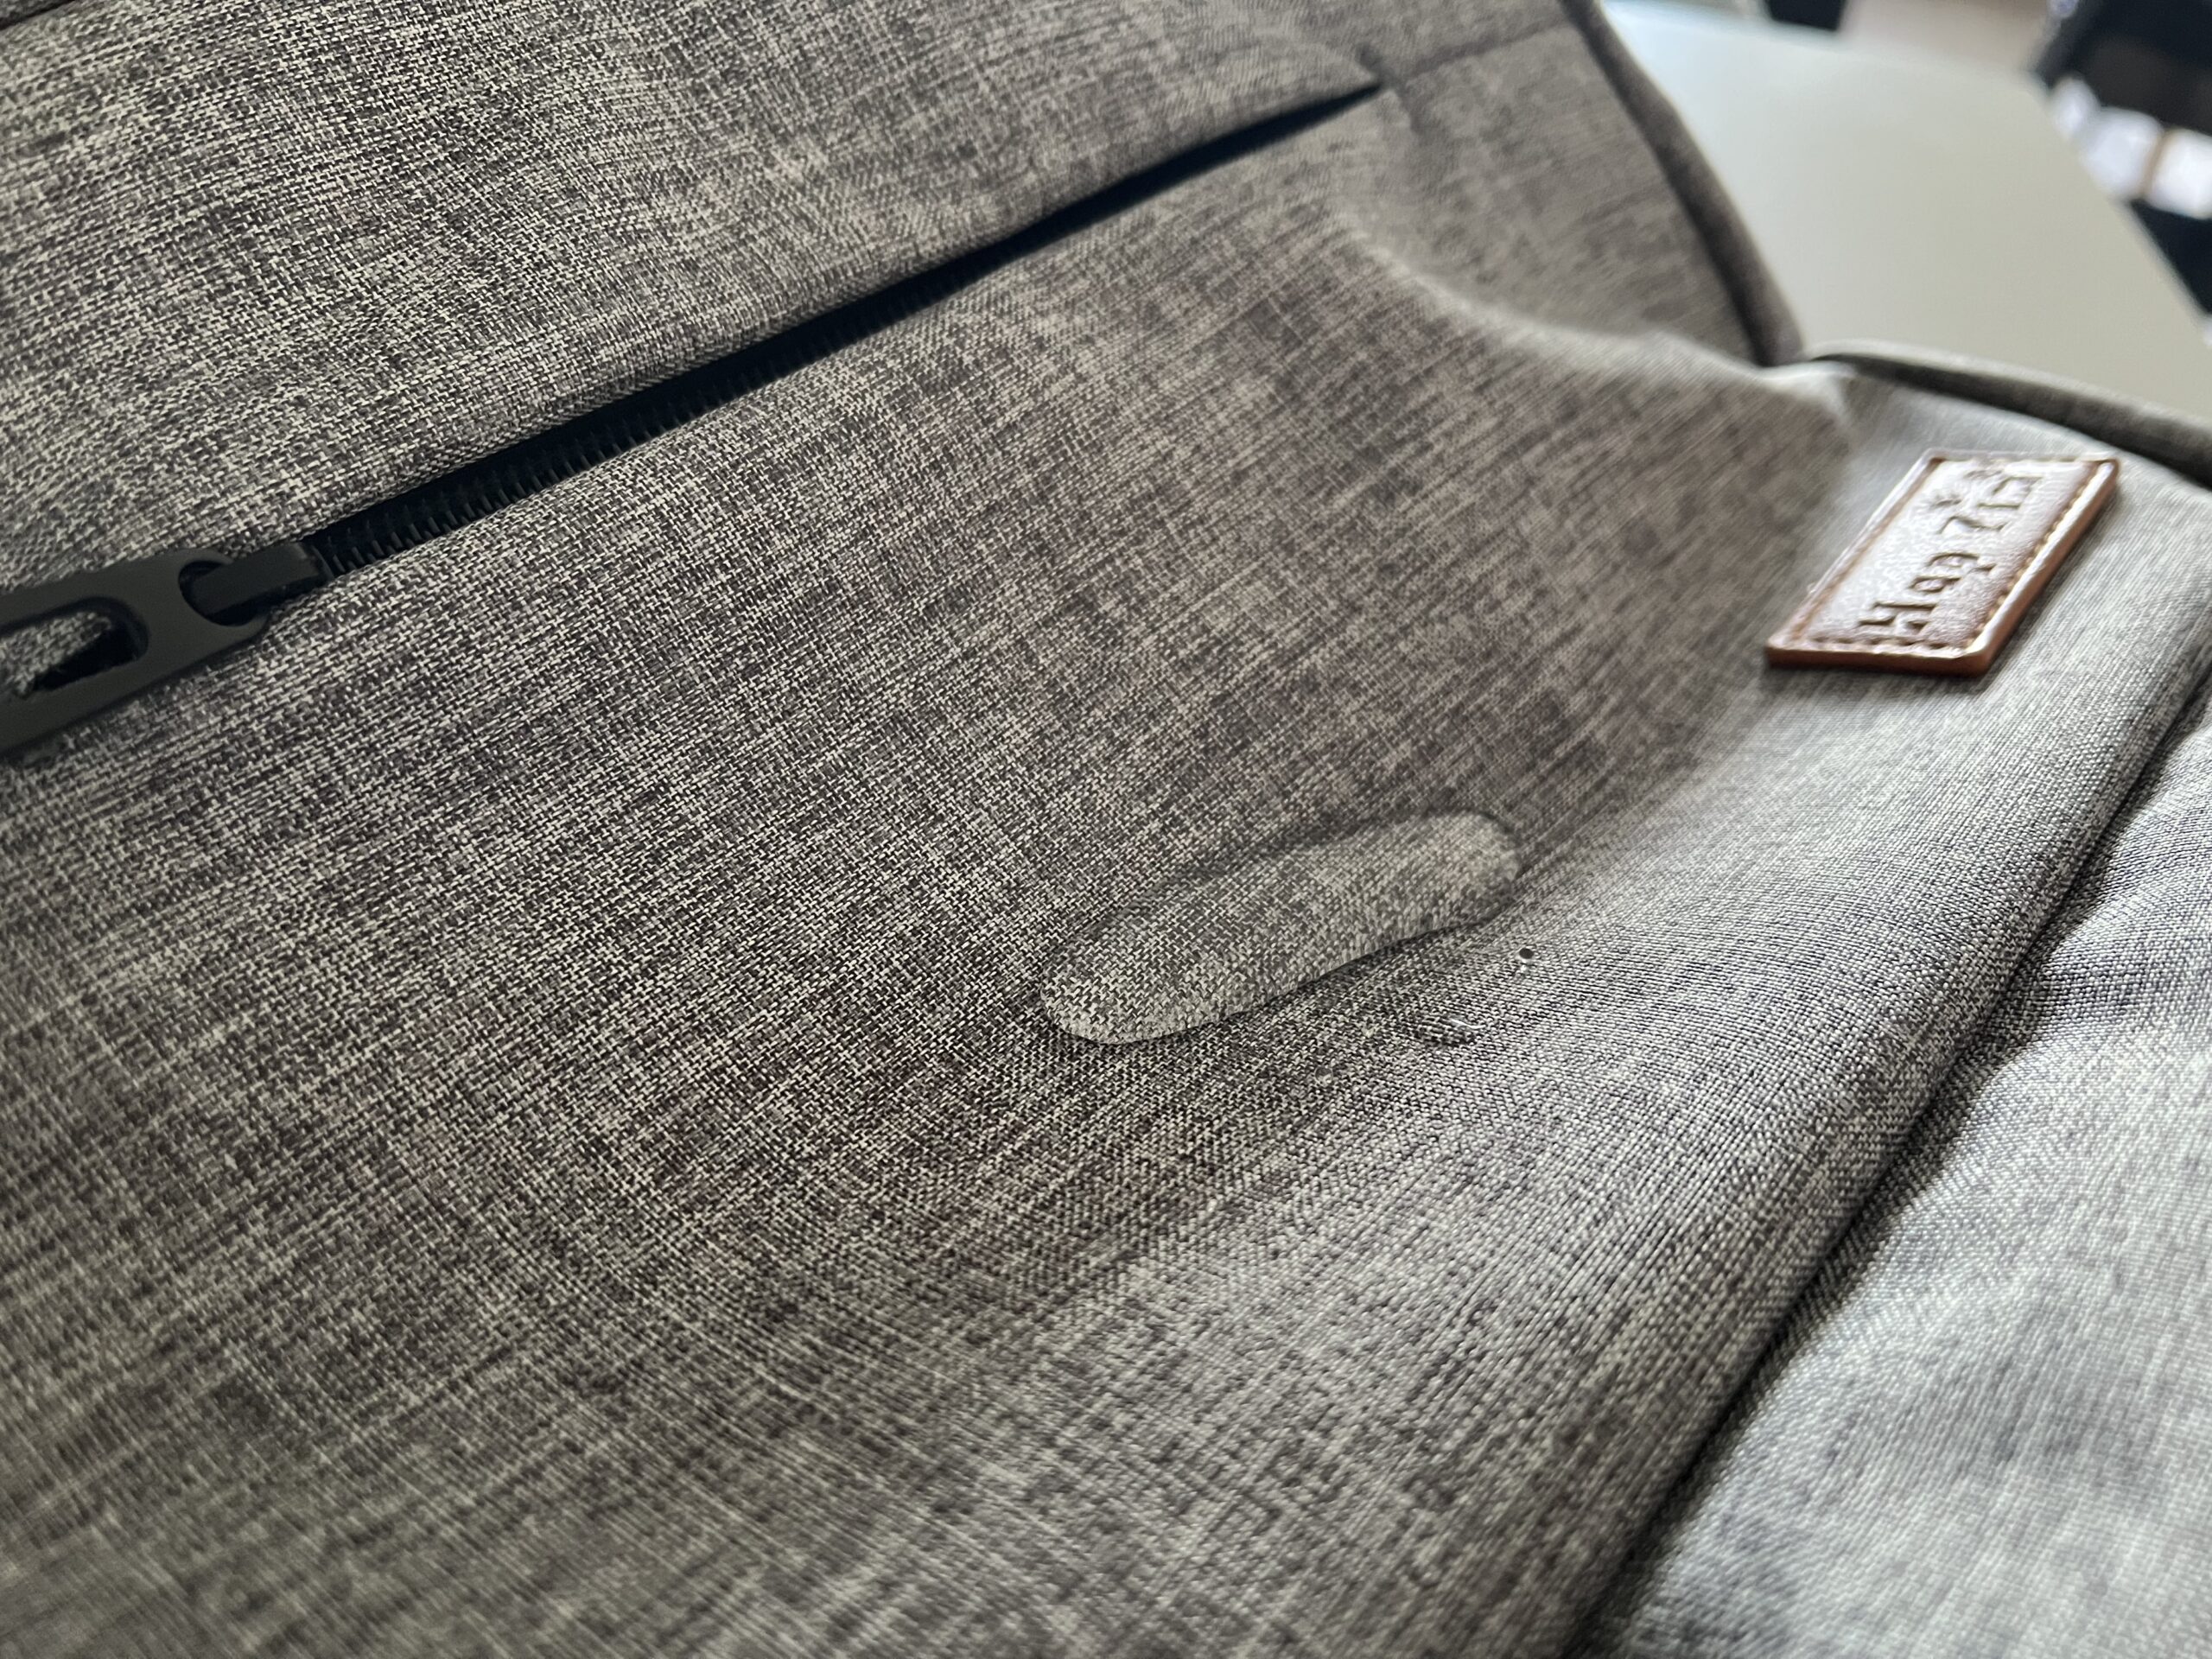 Liquid slicks off the water-resistant fabric of the HapTim Diaper Backpack.